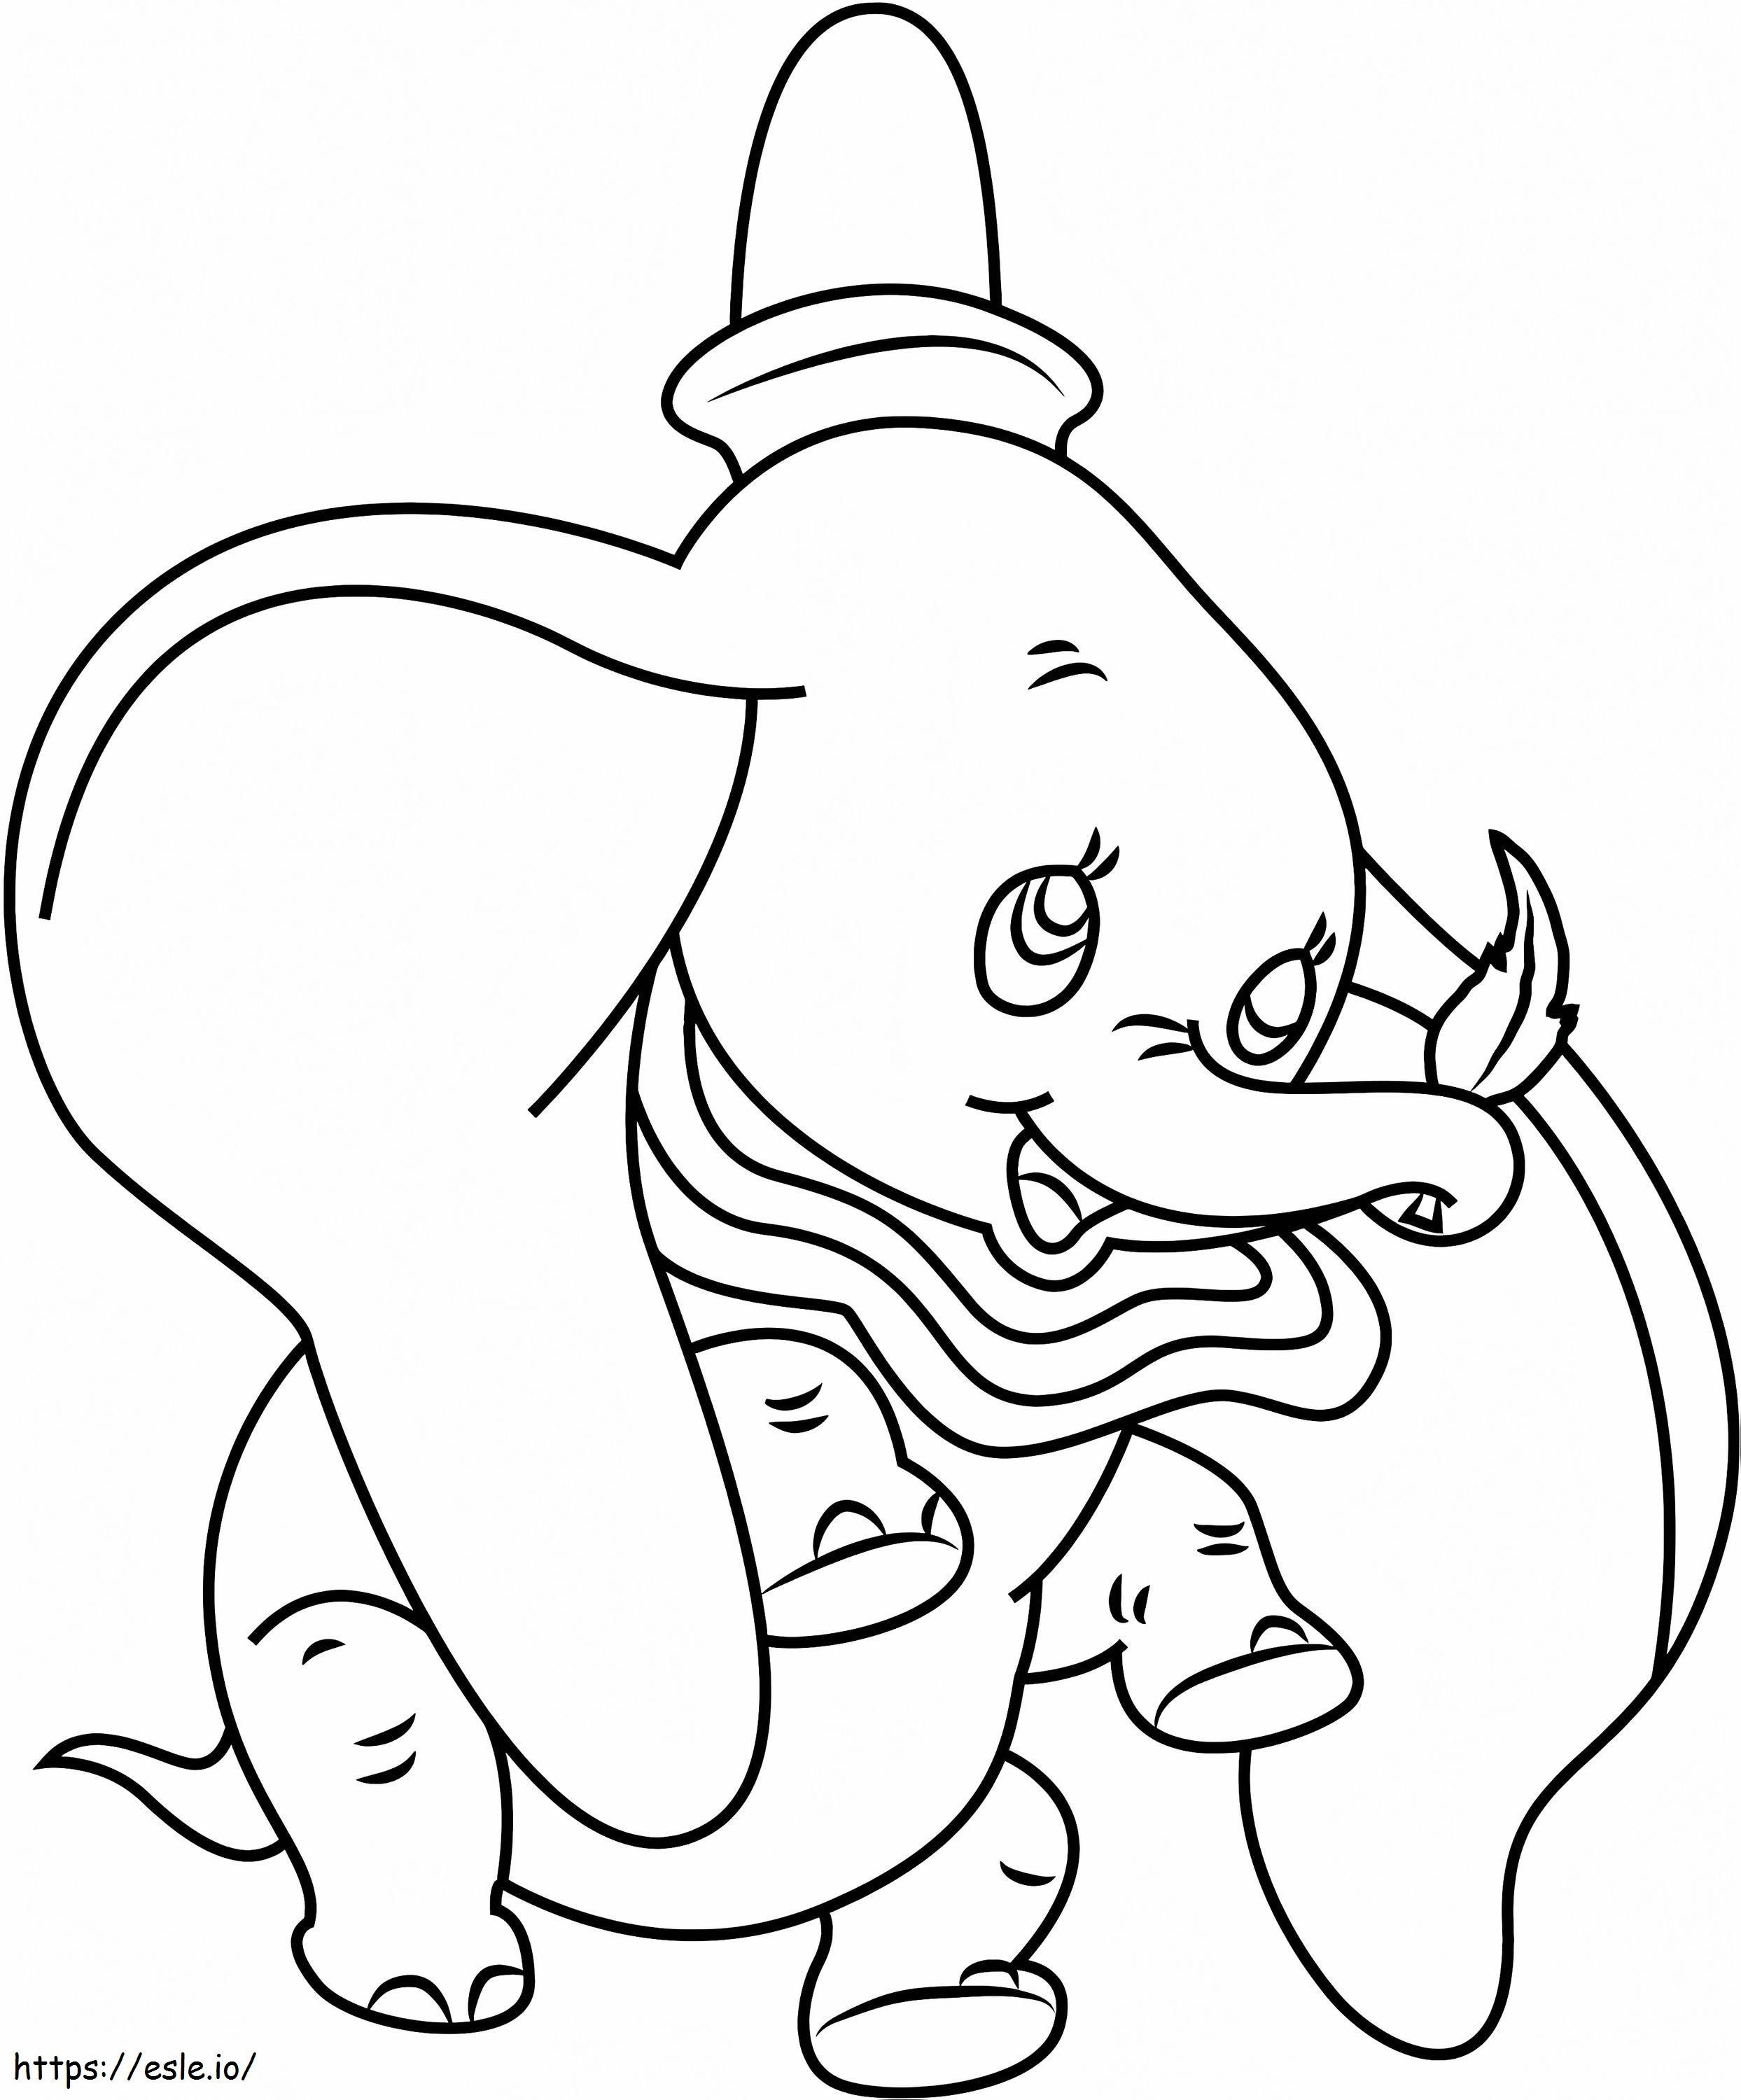 1530929502 Dumbo Sosteniendo Hoja A4 para colorear